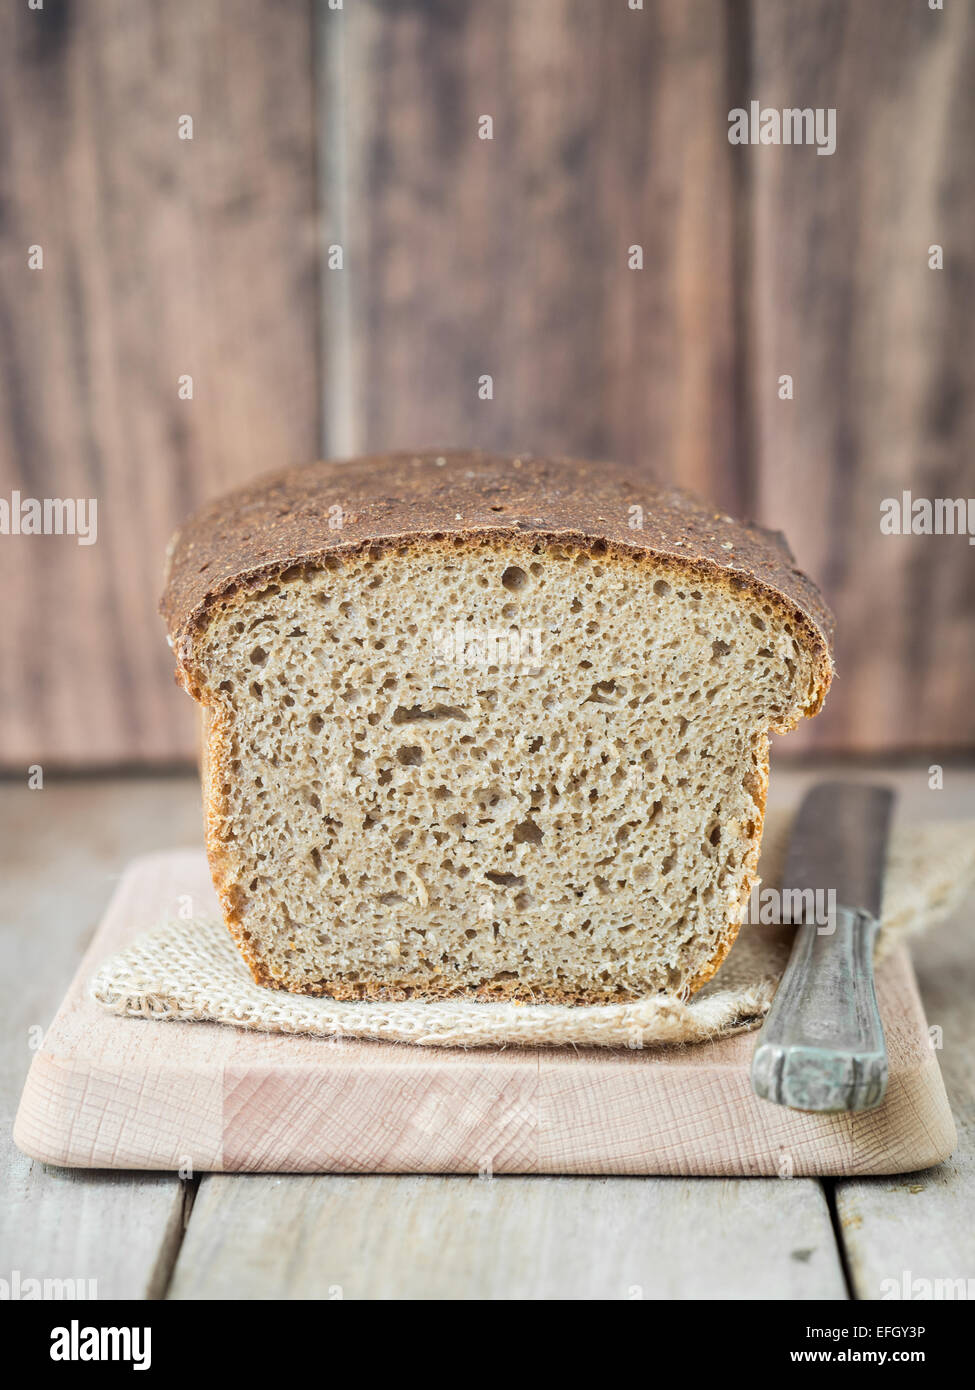 Homemade whole grain mixed rye-wheat sourdough bread on a cutting board. Stock Photo